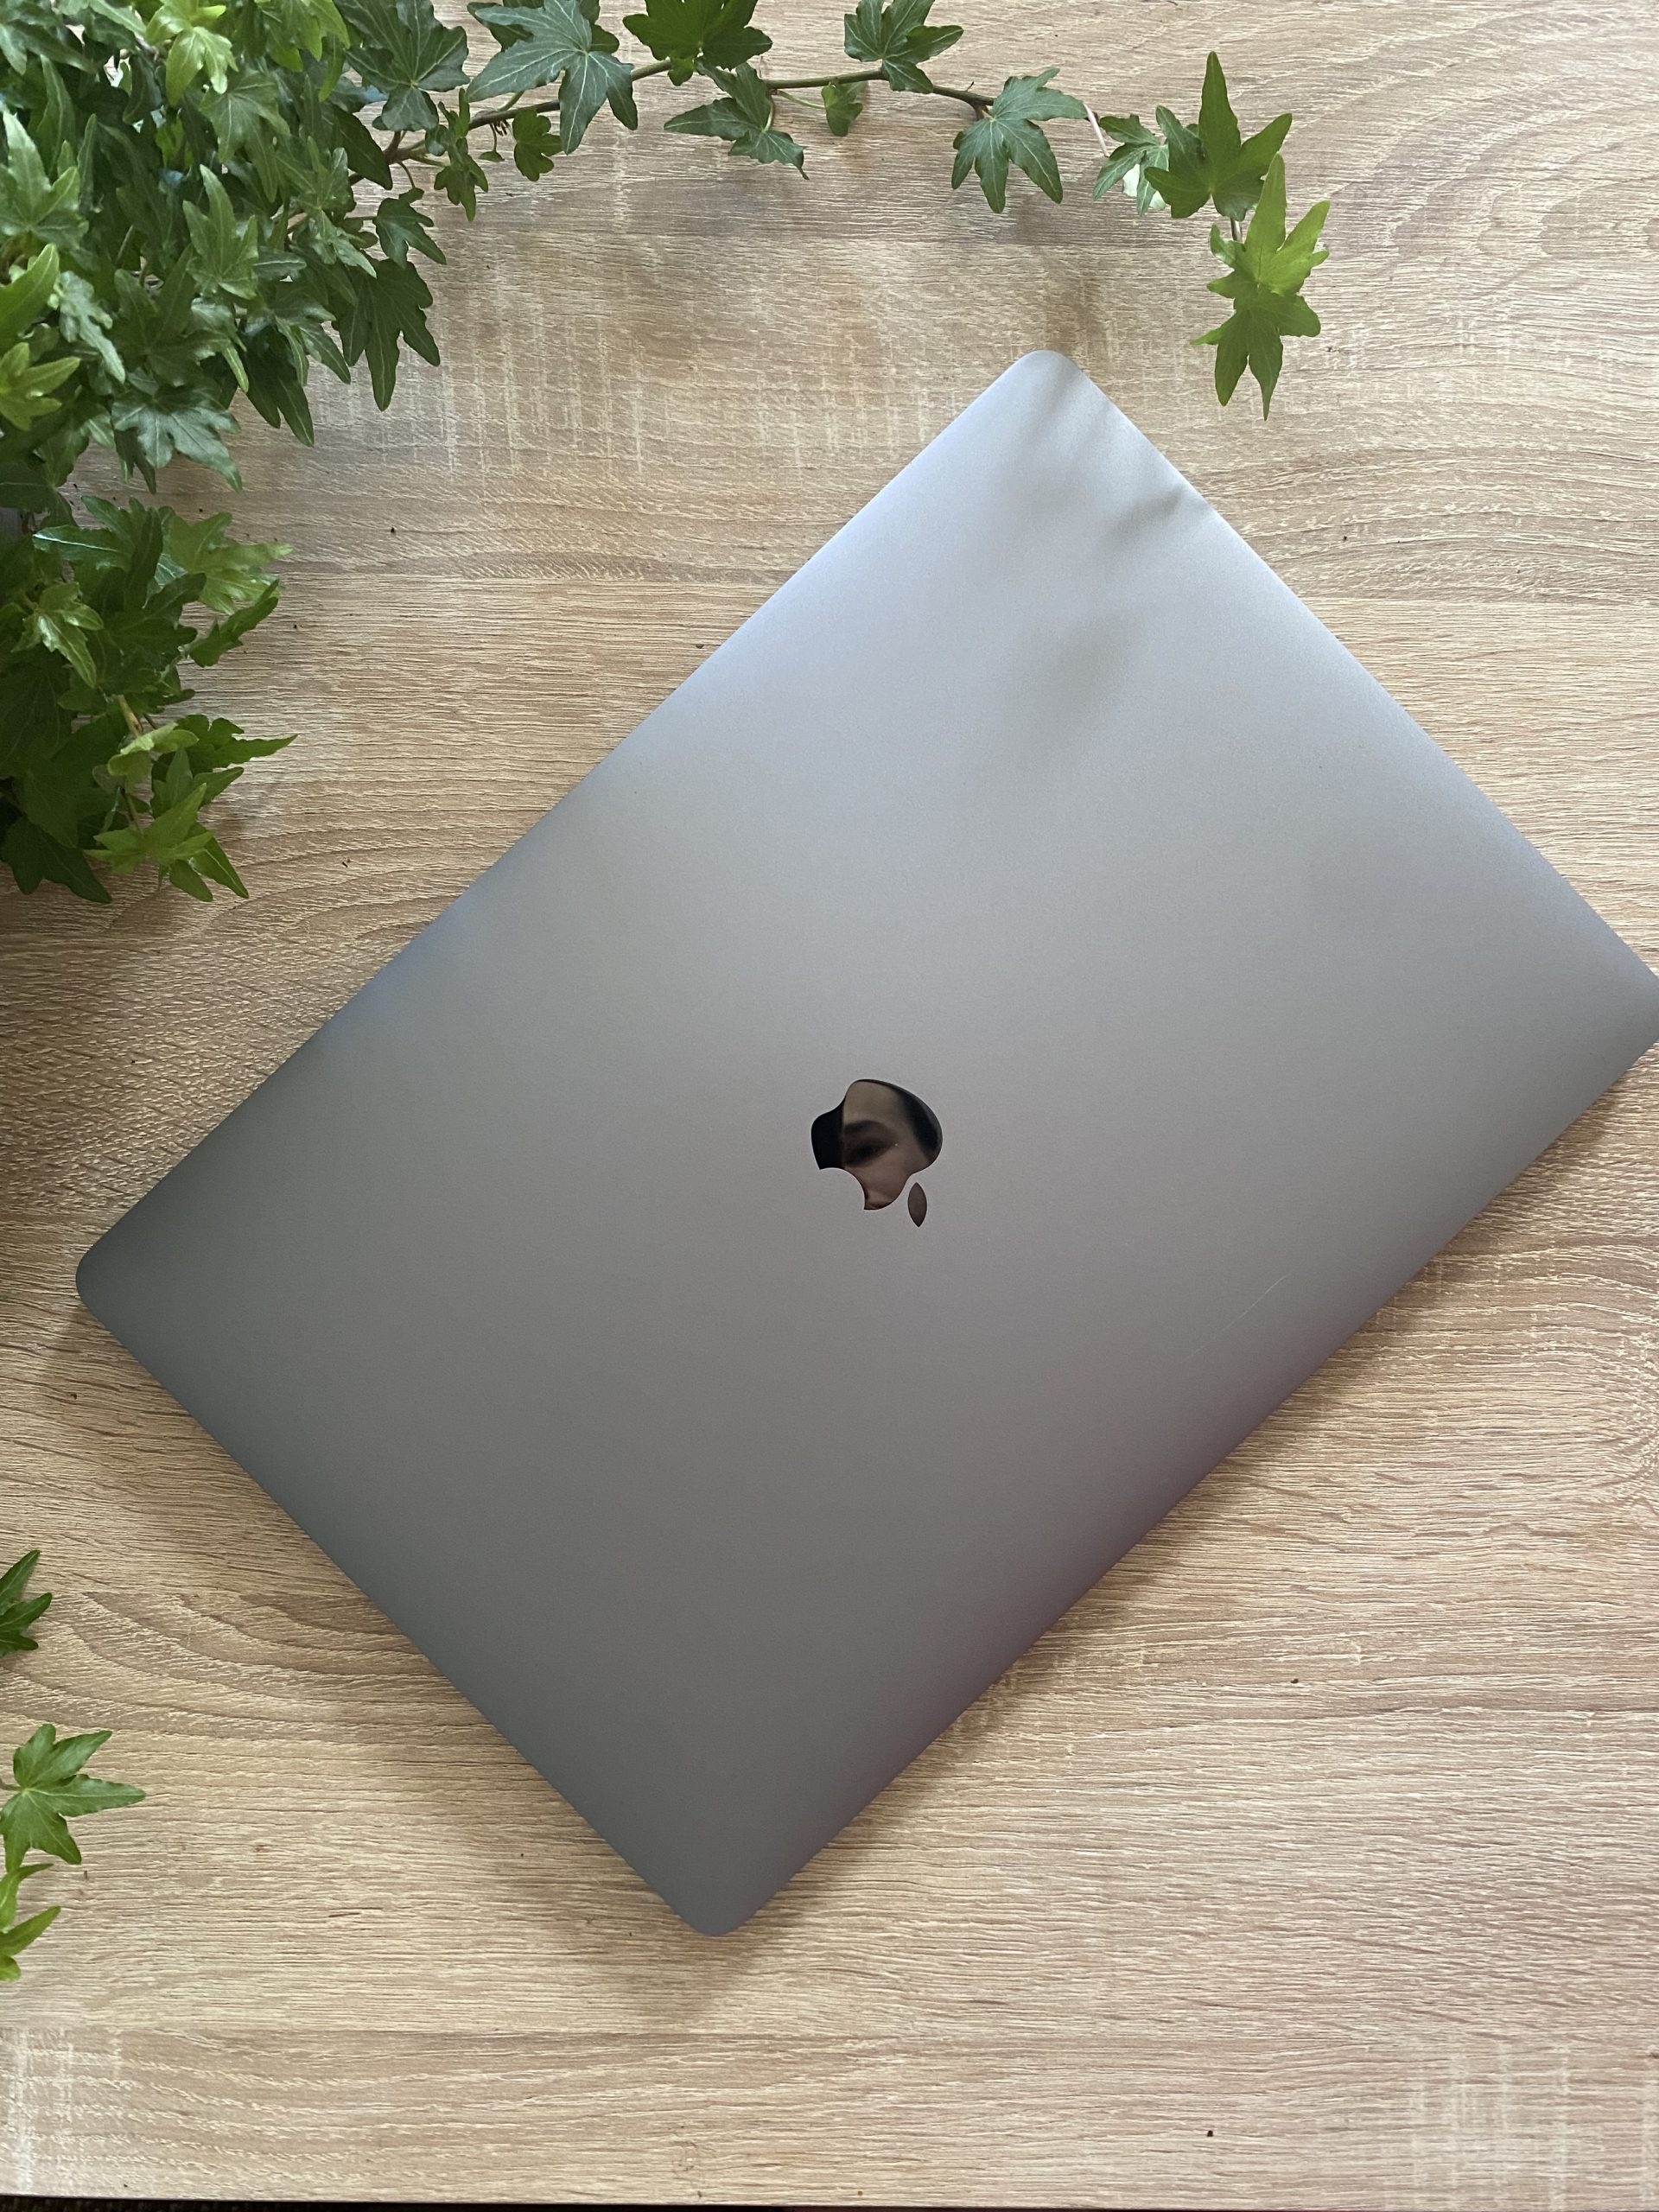 MacBook Pro 15 pouces Mid 2018 – i7 – 16Go